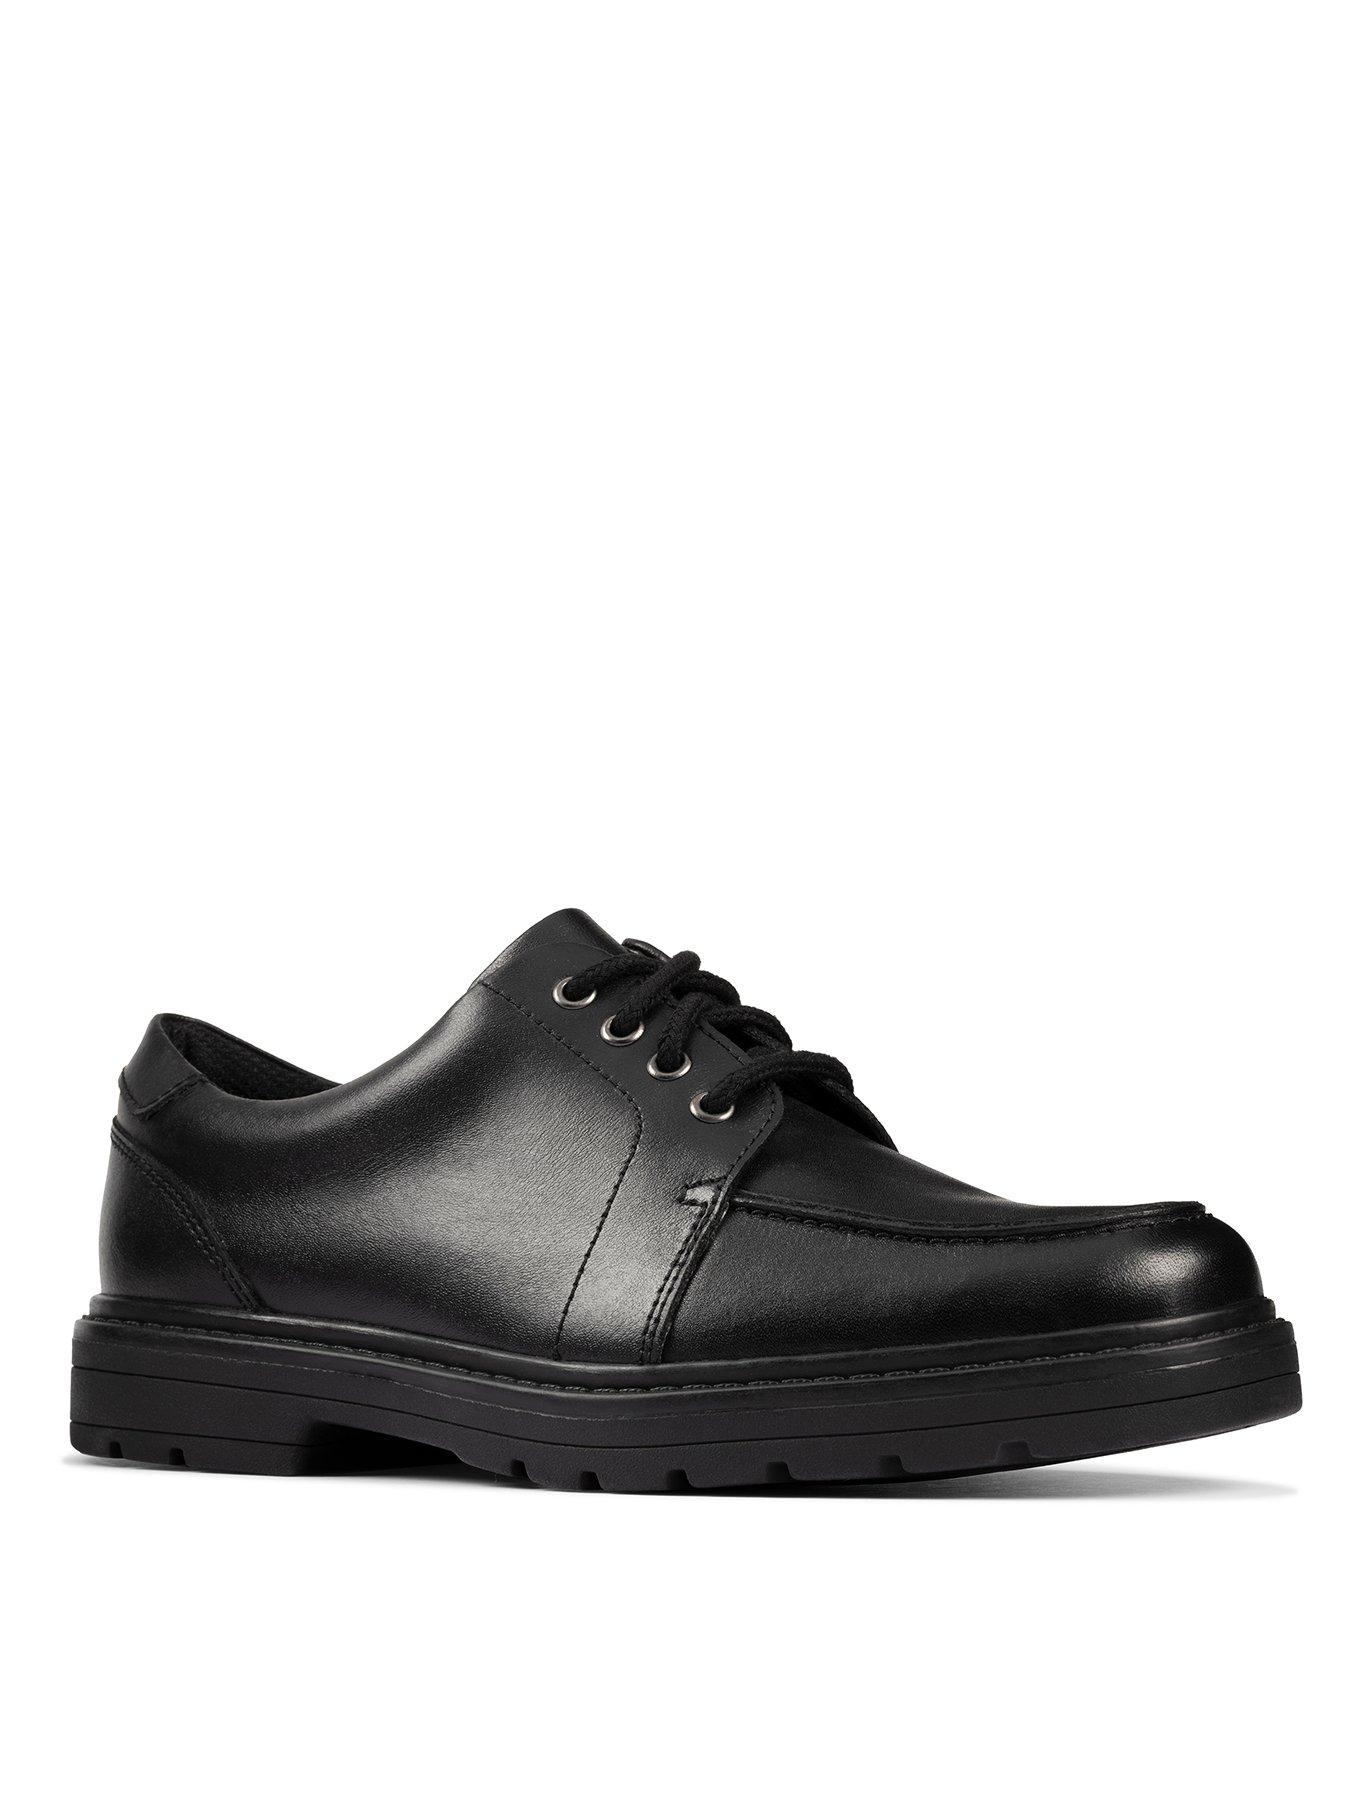 Shoes & boots Youth Loxham Pace Lace Up School Shoe - Black